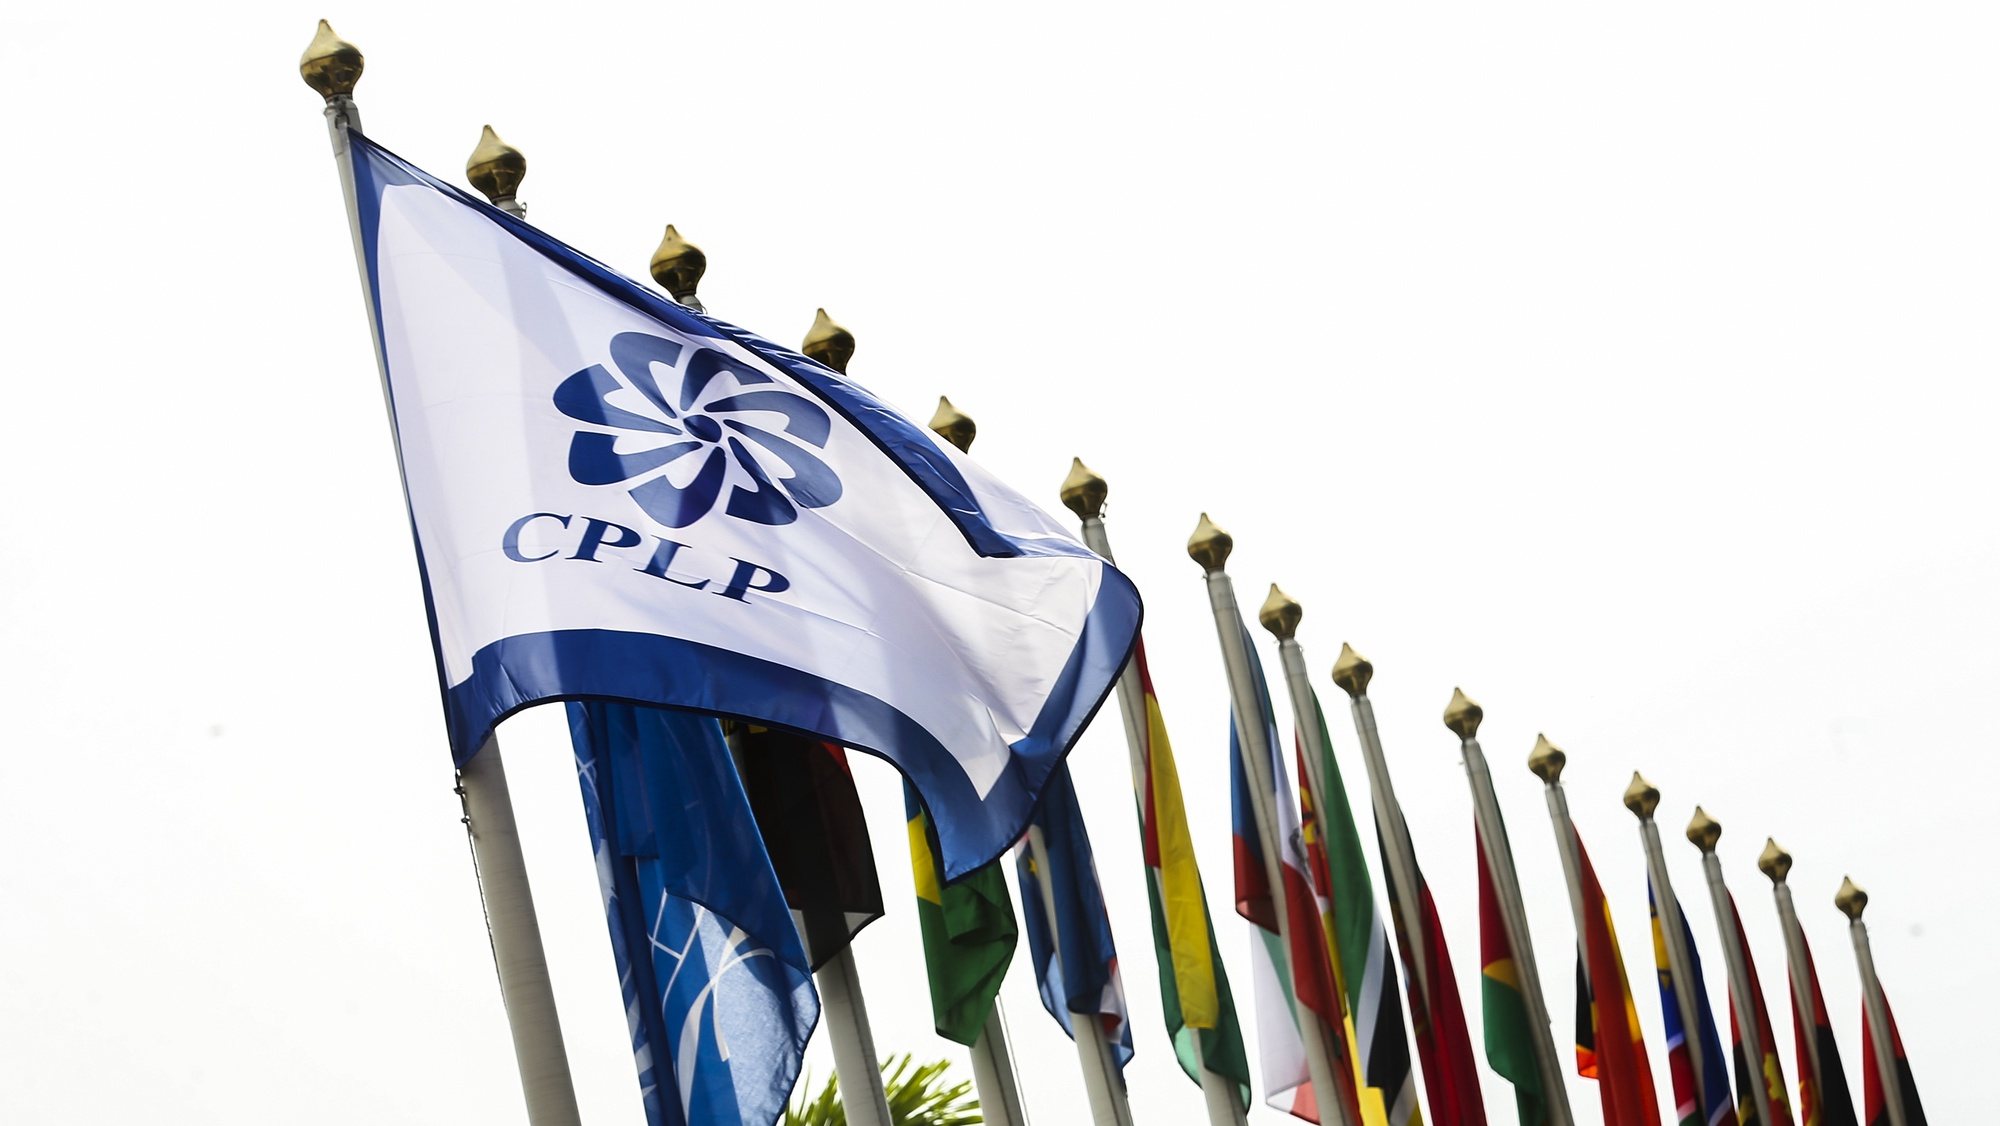 Bandeiras dos países participantes hasteadas no local aonde se realiza a XIII Conferência de Chefes de Estado e de Governo da Comunidade dos Países de Língua Portuguesa (CPLP), em Luanda, Angola, 17 de julho de 2021. AMPE ROGÉRIO/LUSA